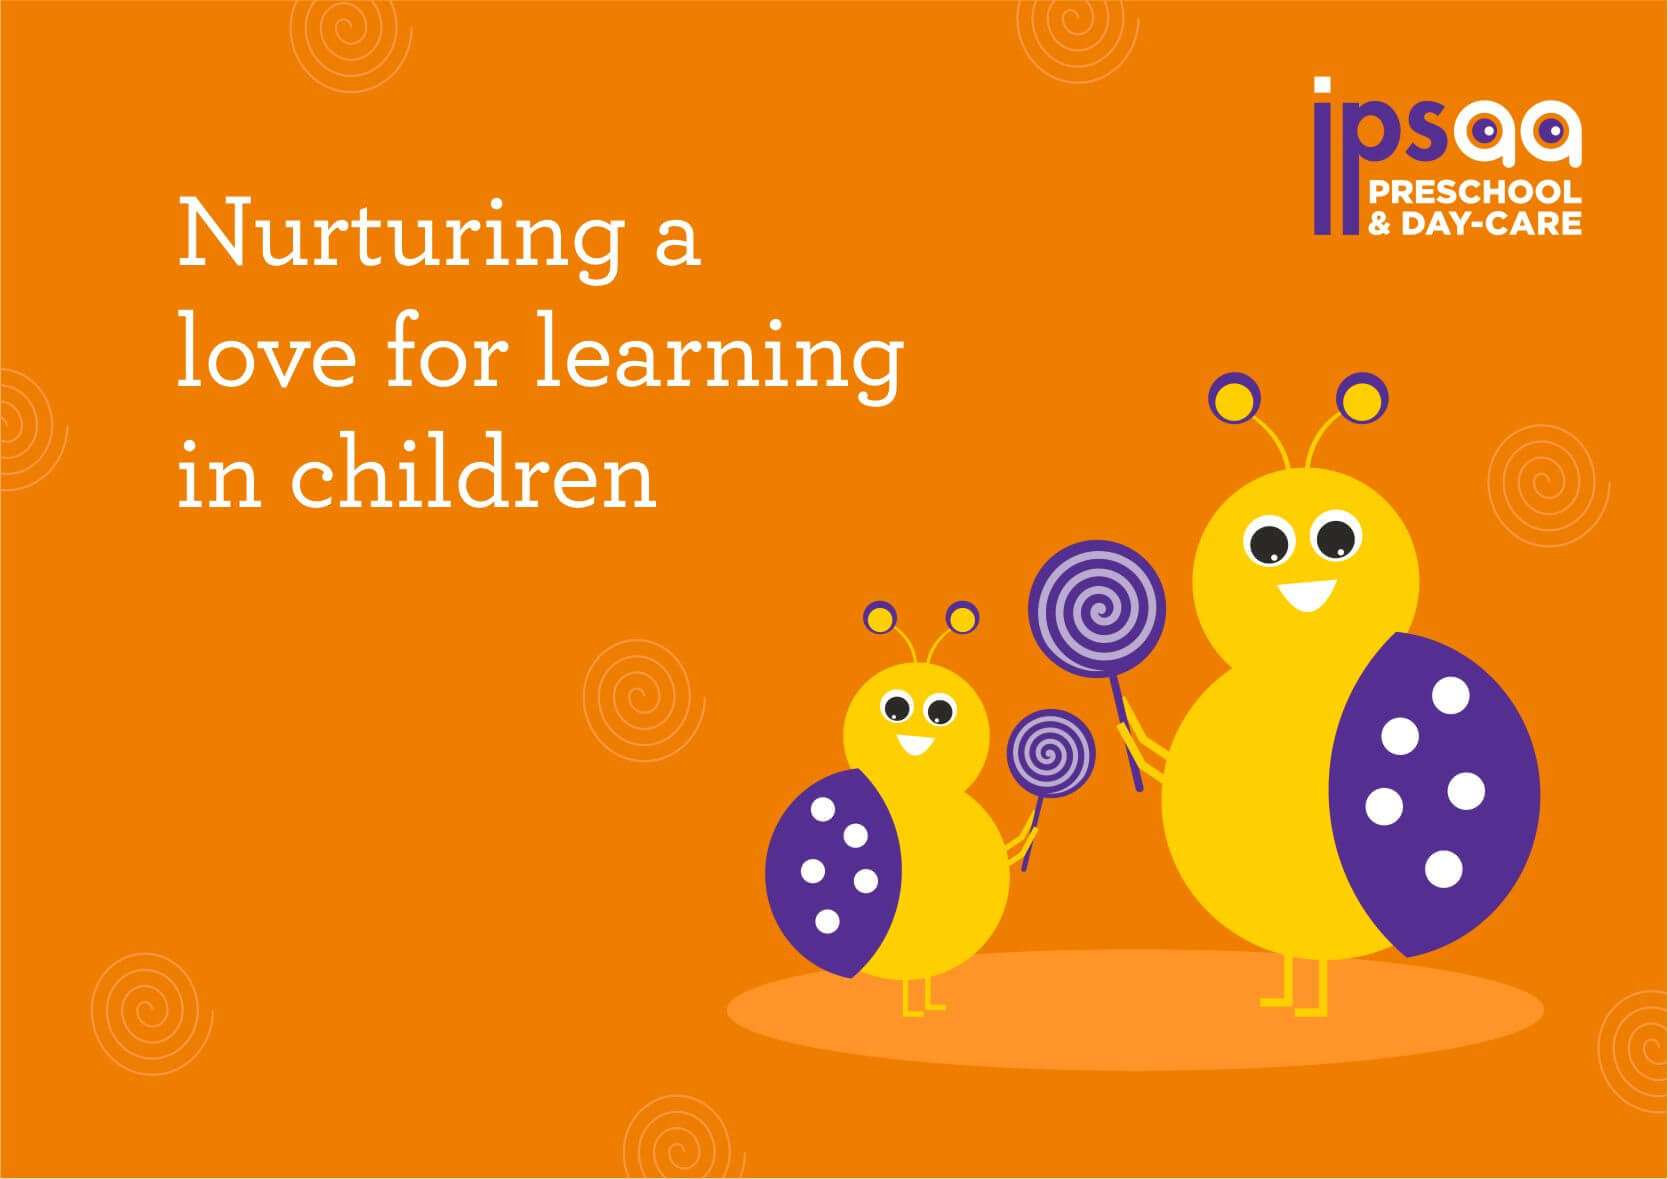 Nurturing a love for learning in children